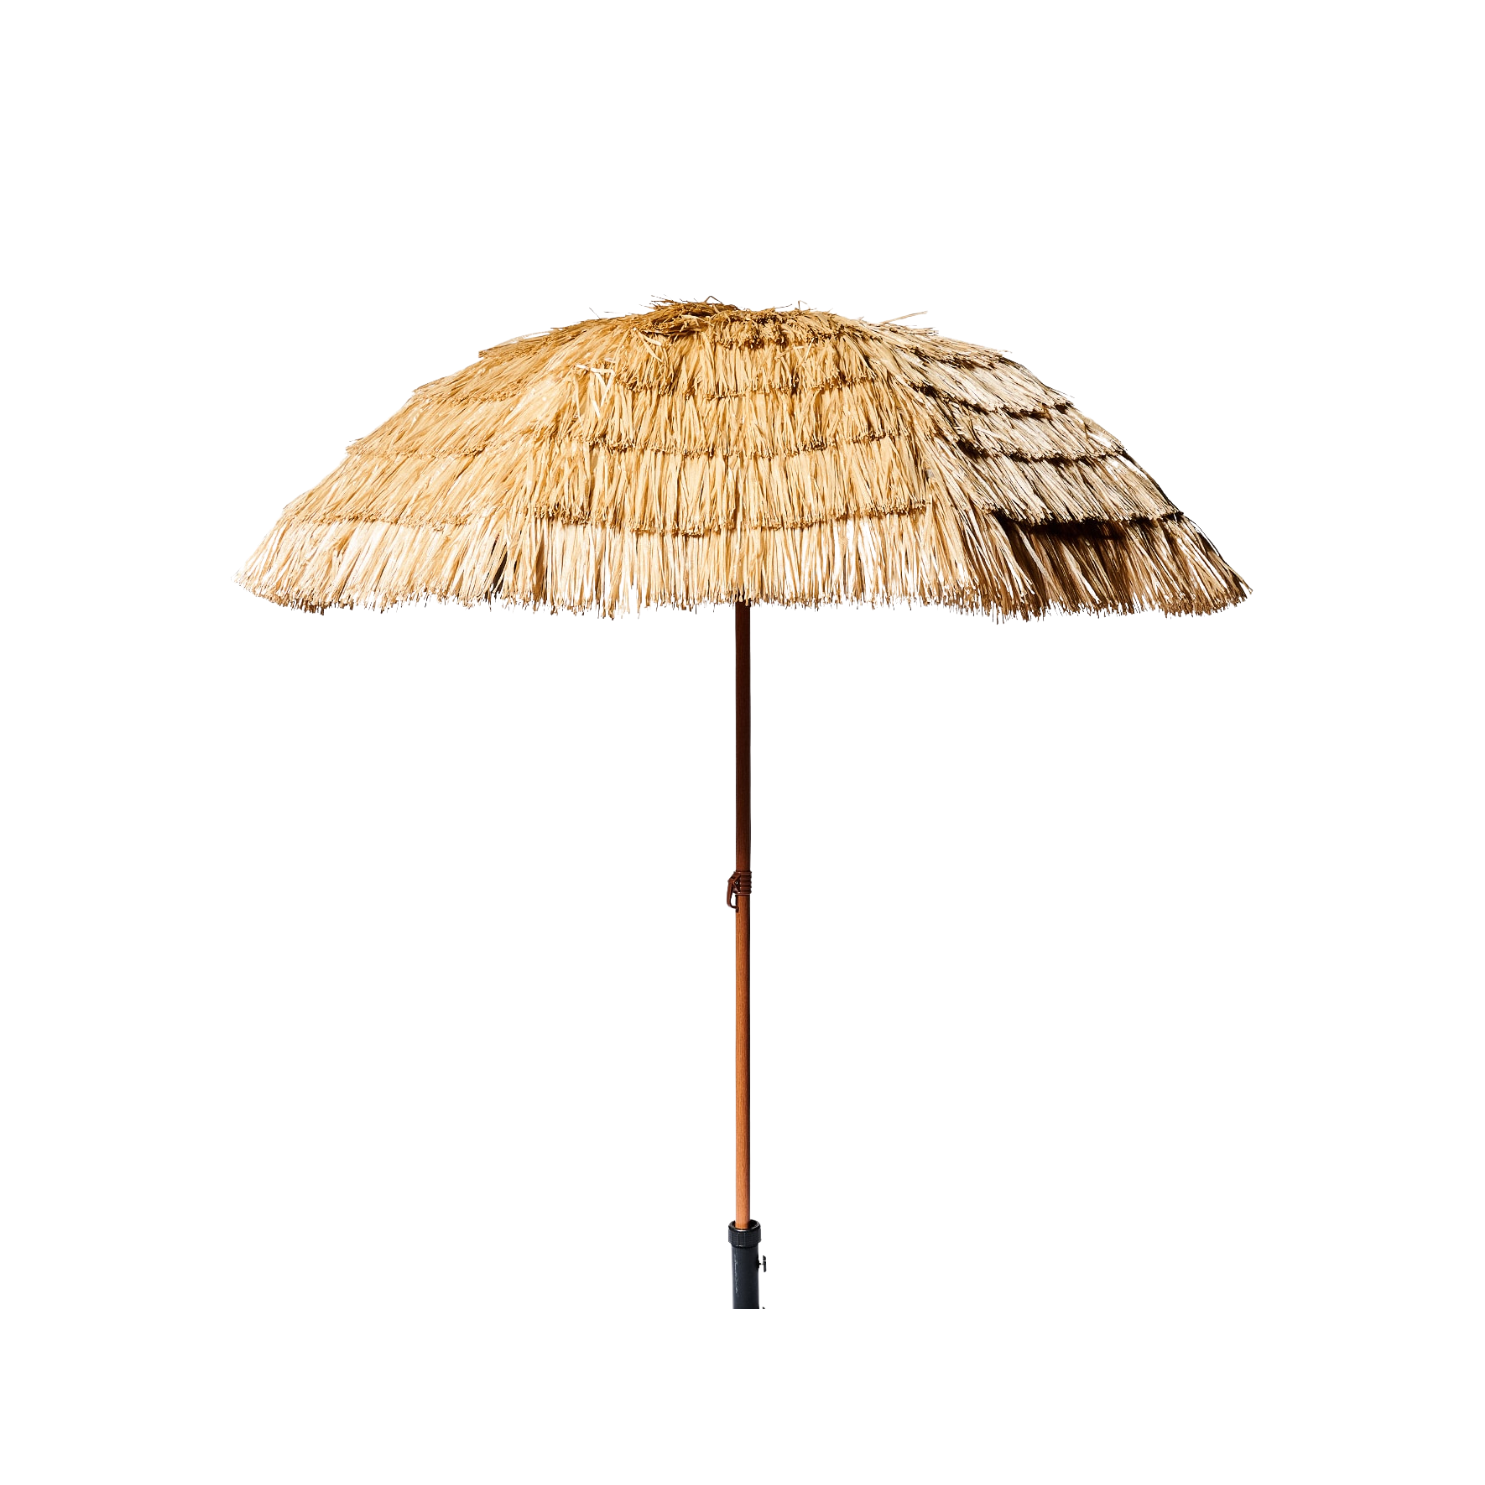 Straw Umbrella - 6 ft.